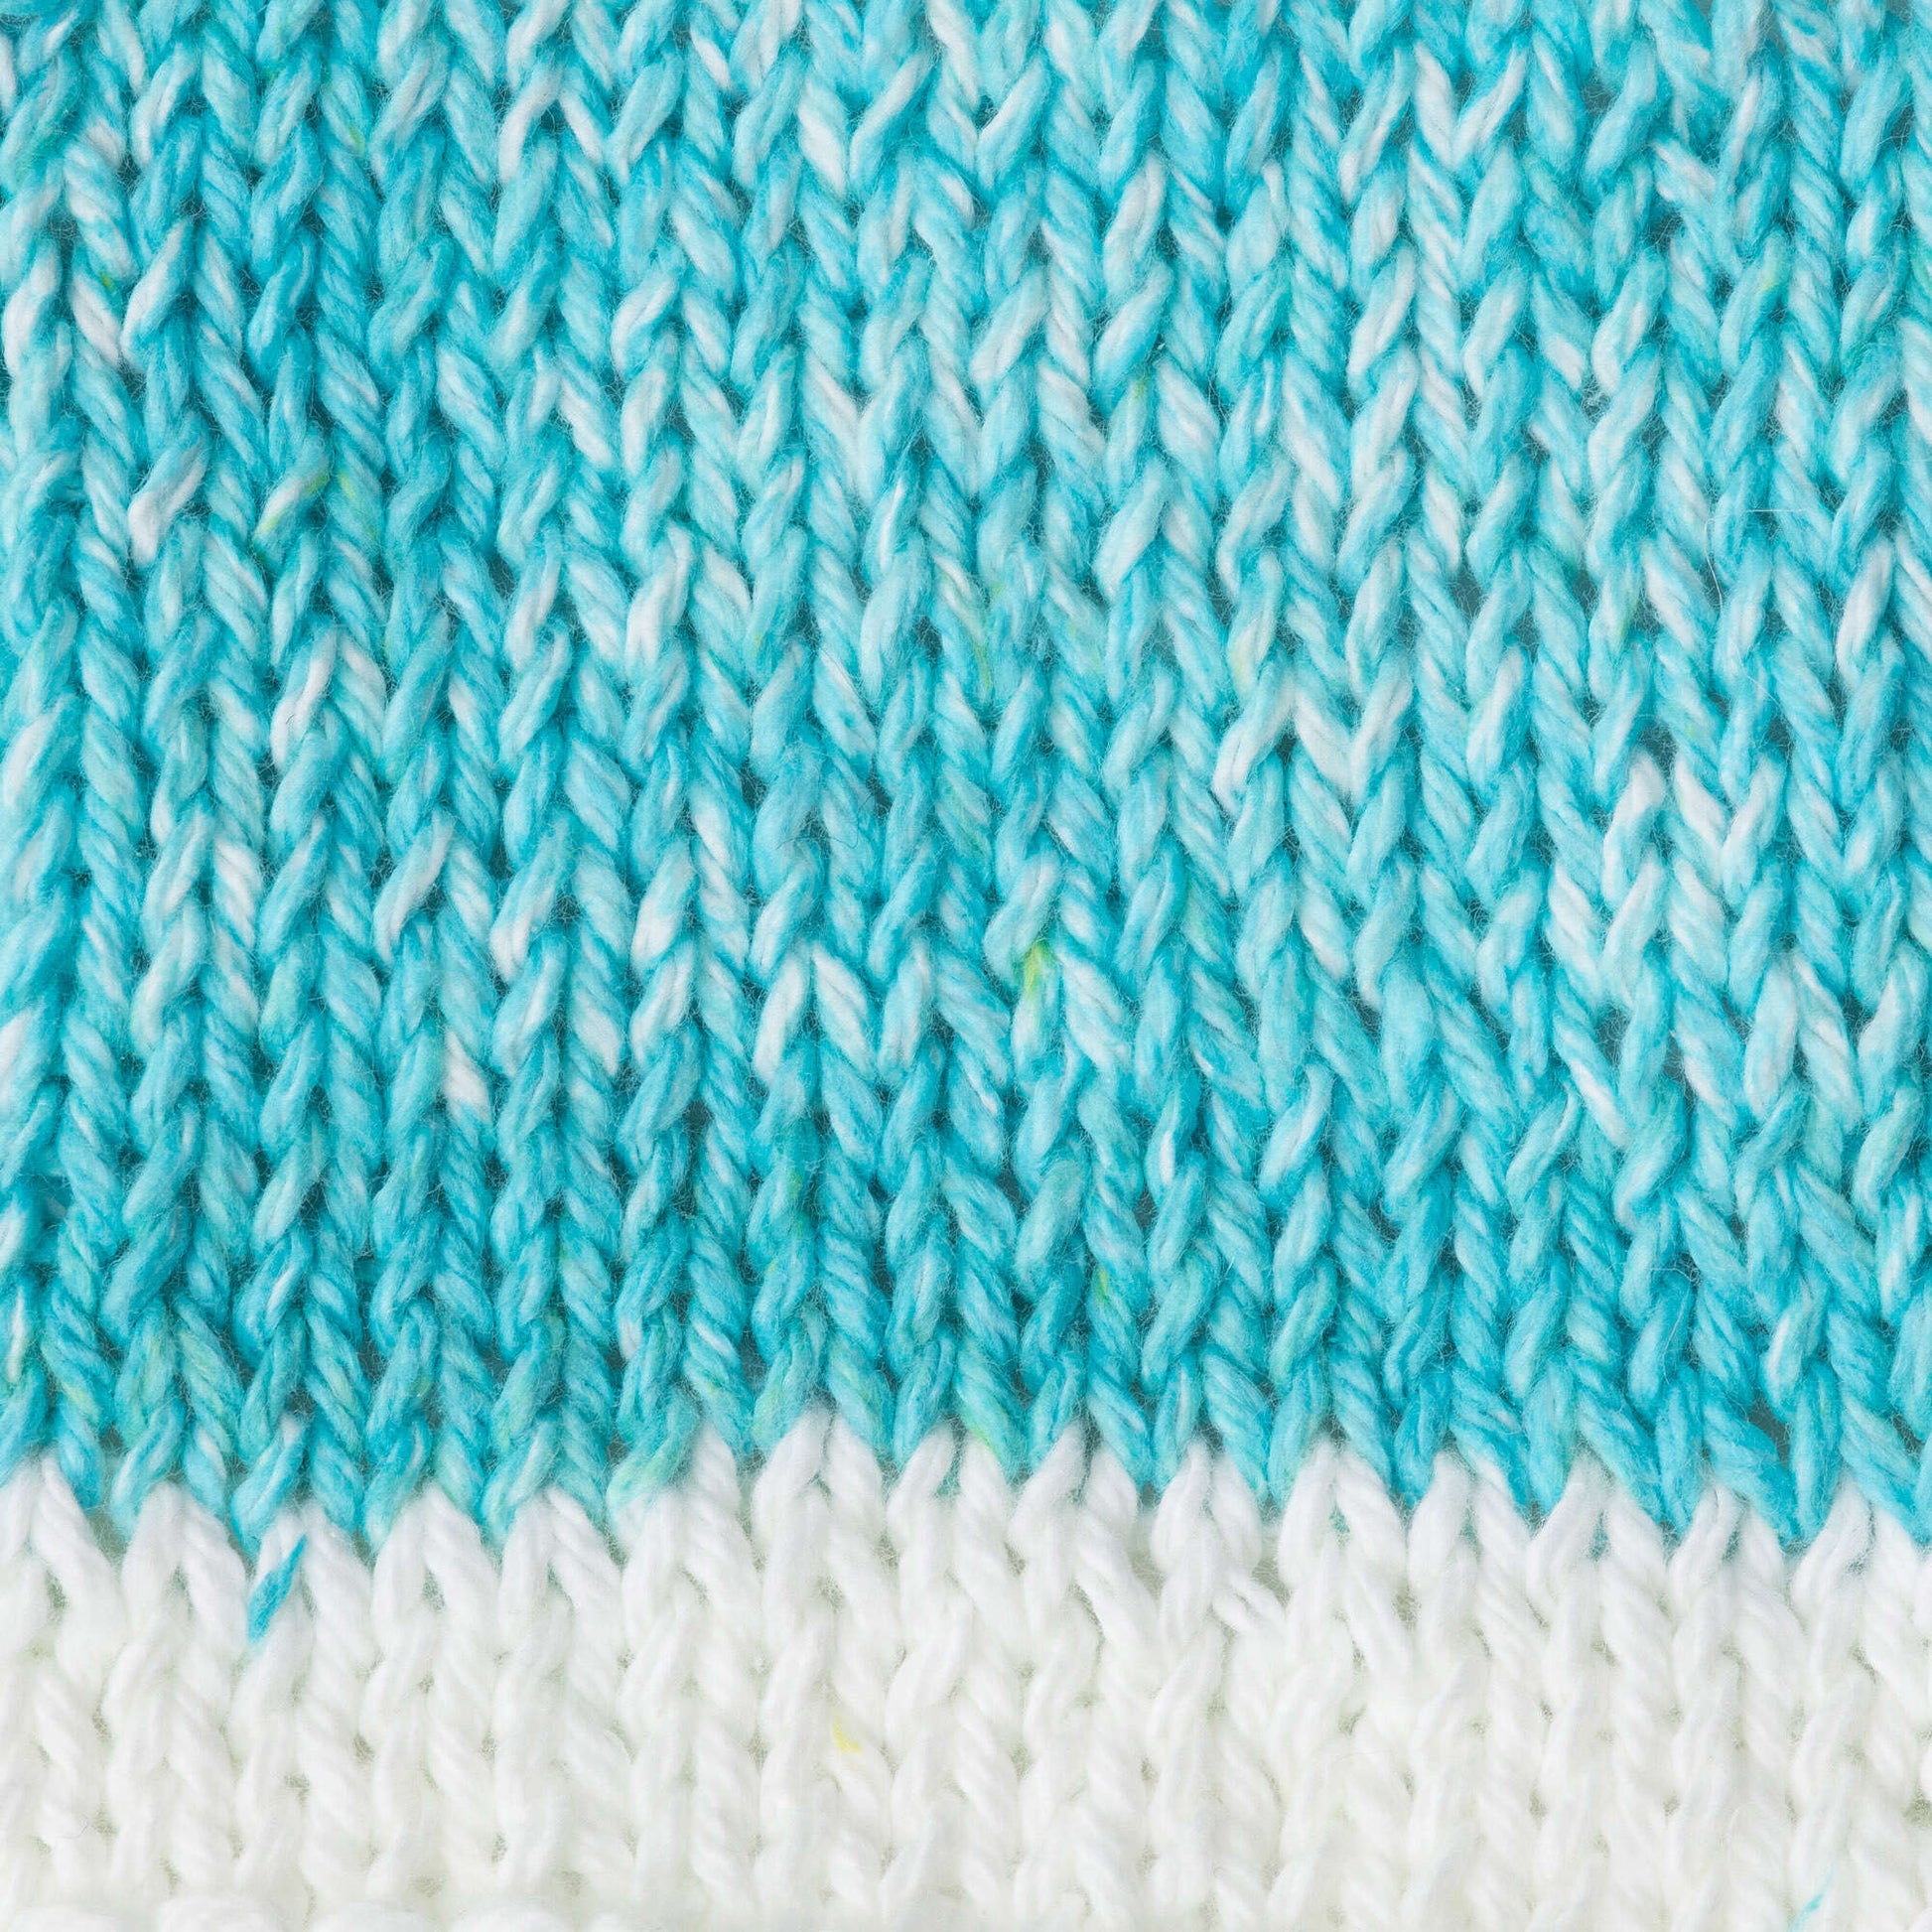 Bernat Handicrafter Cotton Stripes Yarn - Discontinued Shades